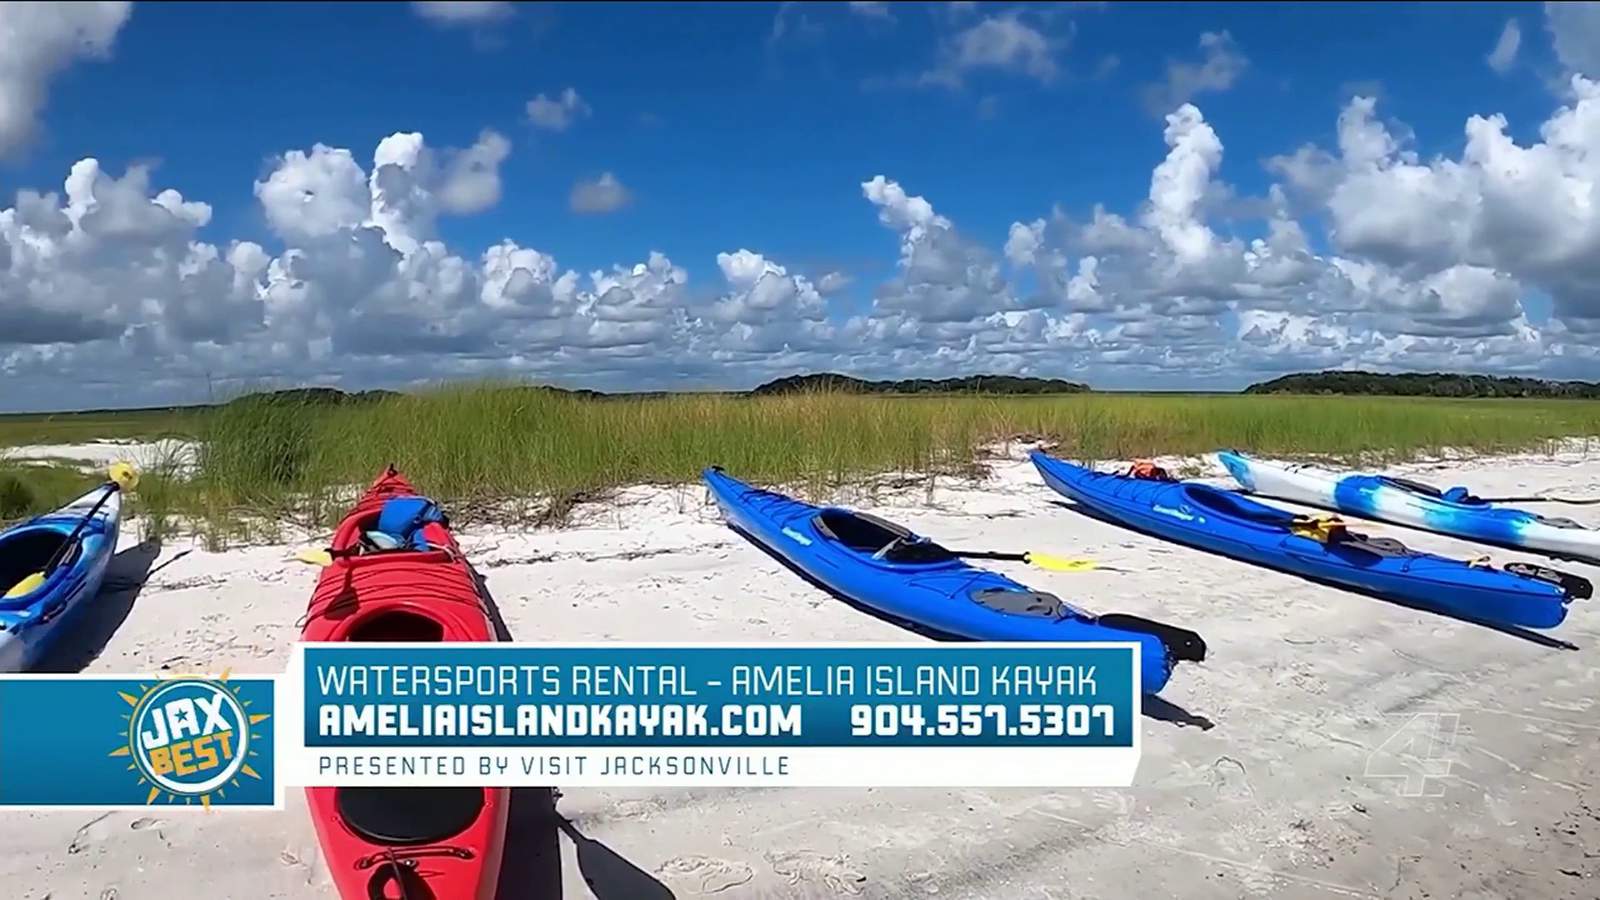 Jax Best Water Sports Rental: Amelia Island Kayak | River City Live